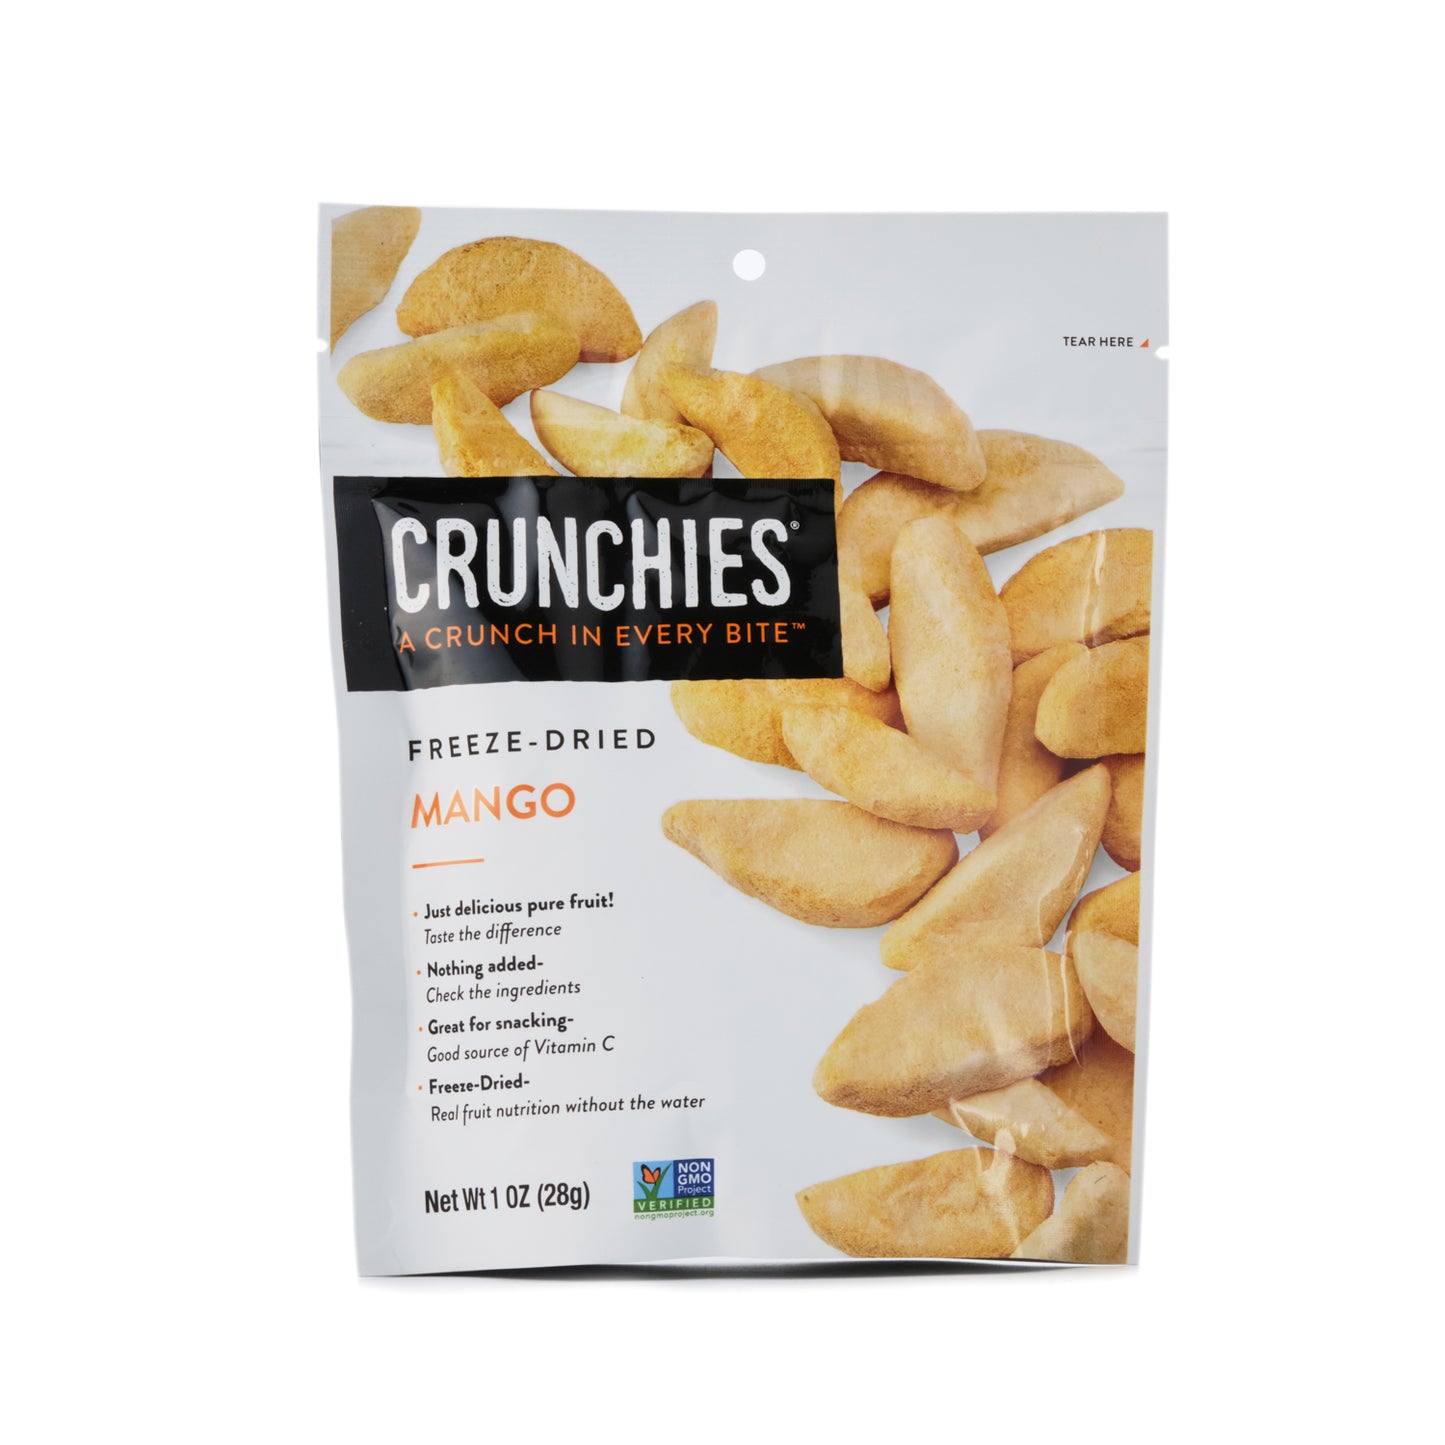 Crunchies Freeze-Dried Mango 28g